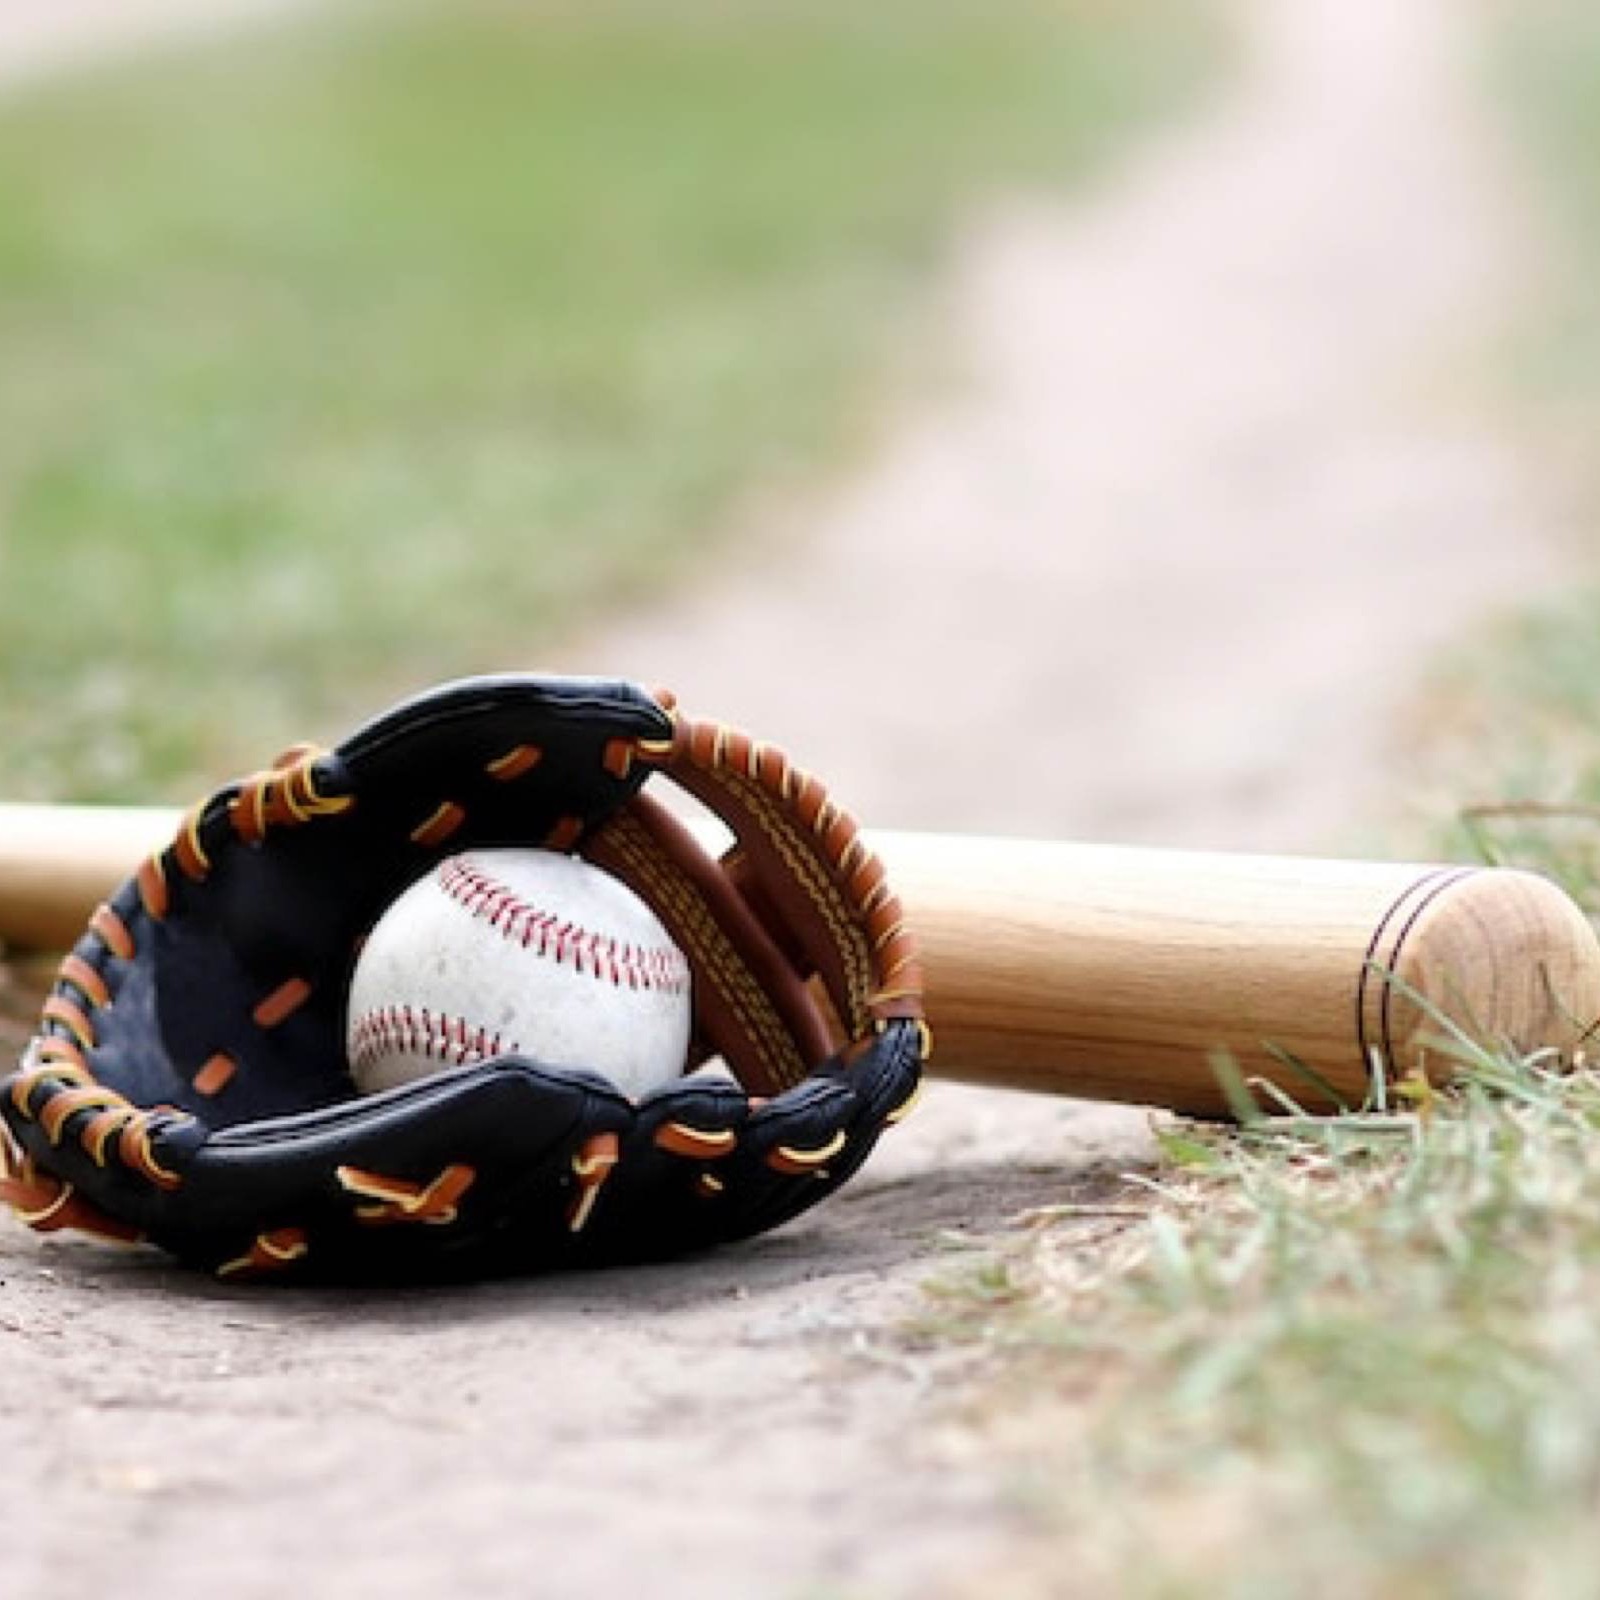 Braves announcer Joe Simpson chides Dodgers for batting practice shirts 